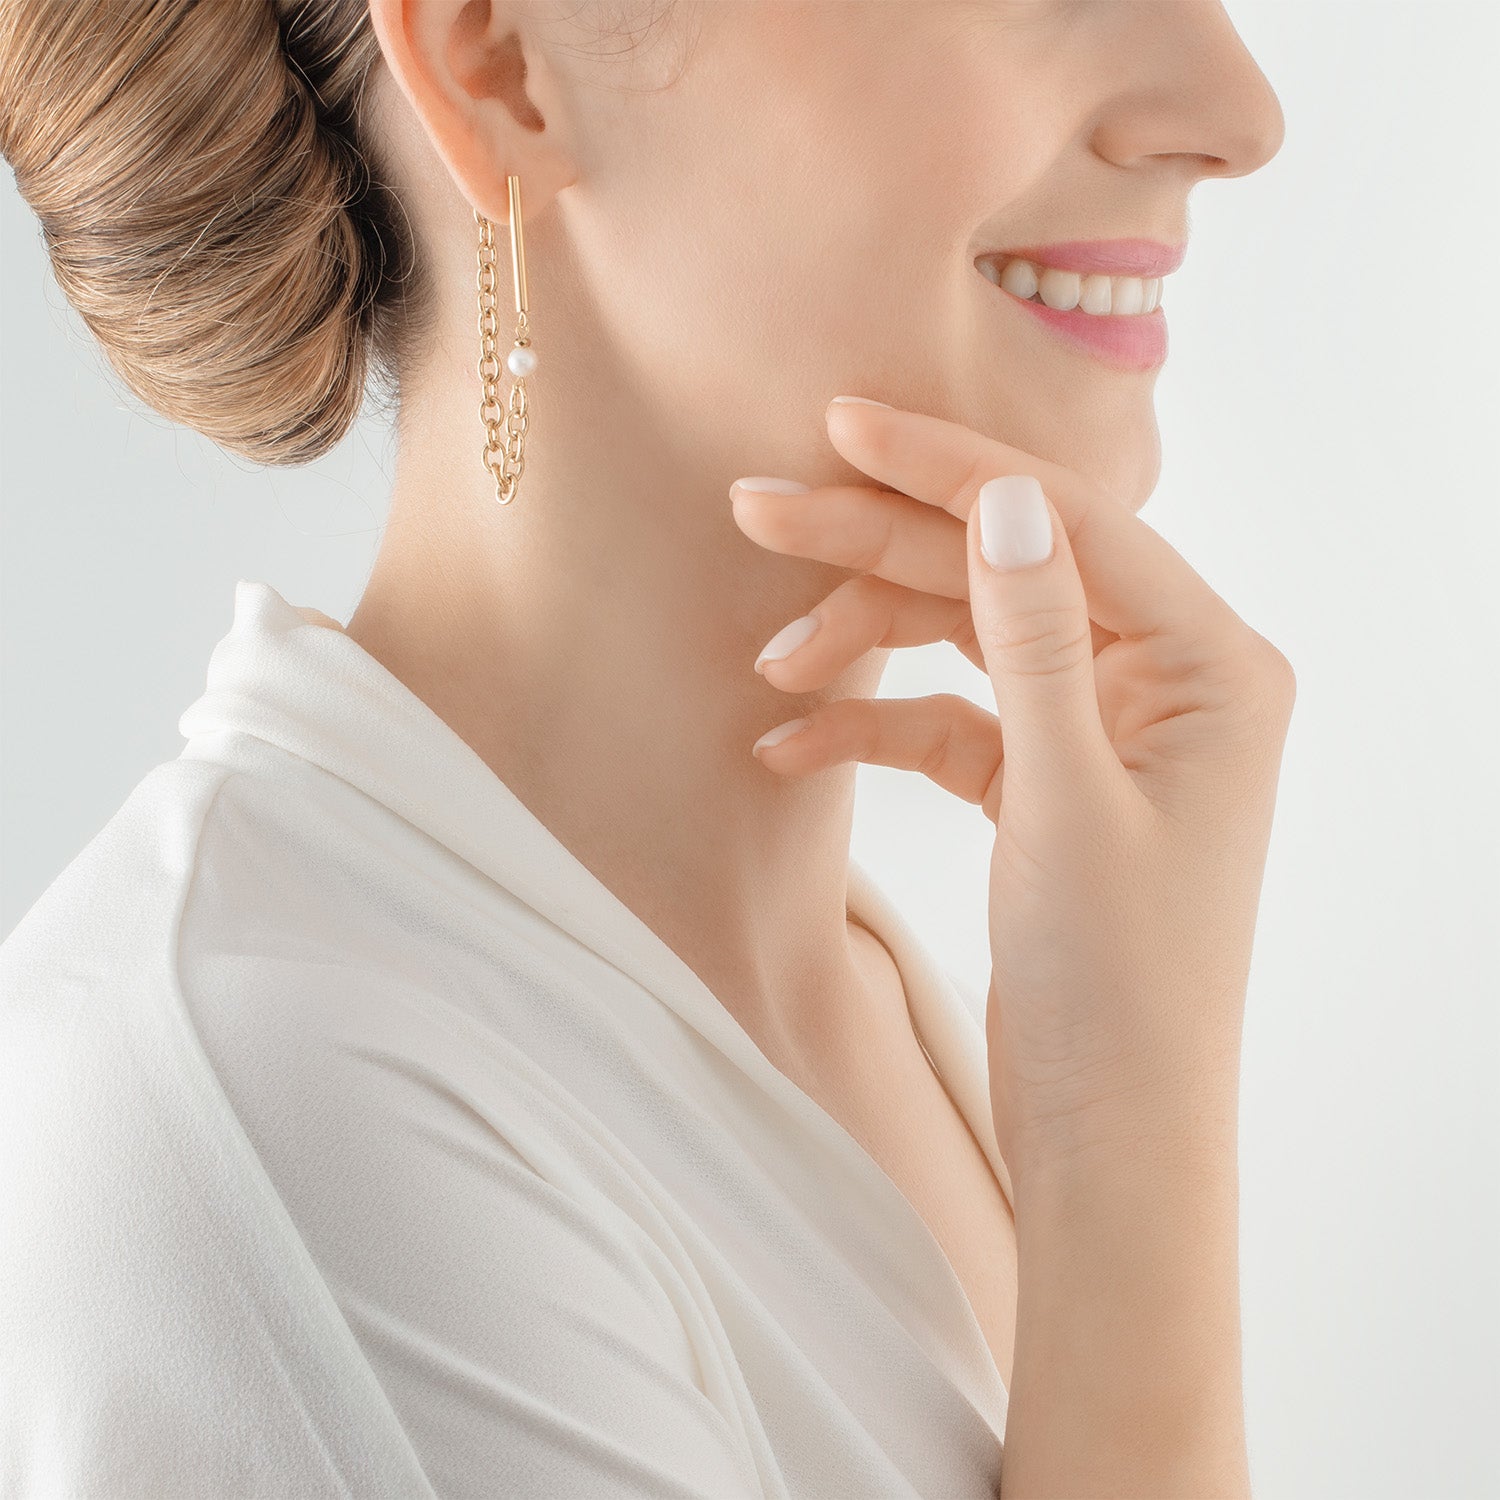 Earrings Chain & Pearl Fever white-gold